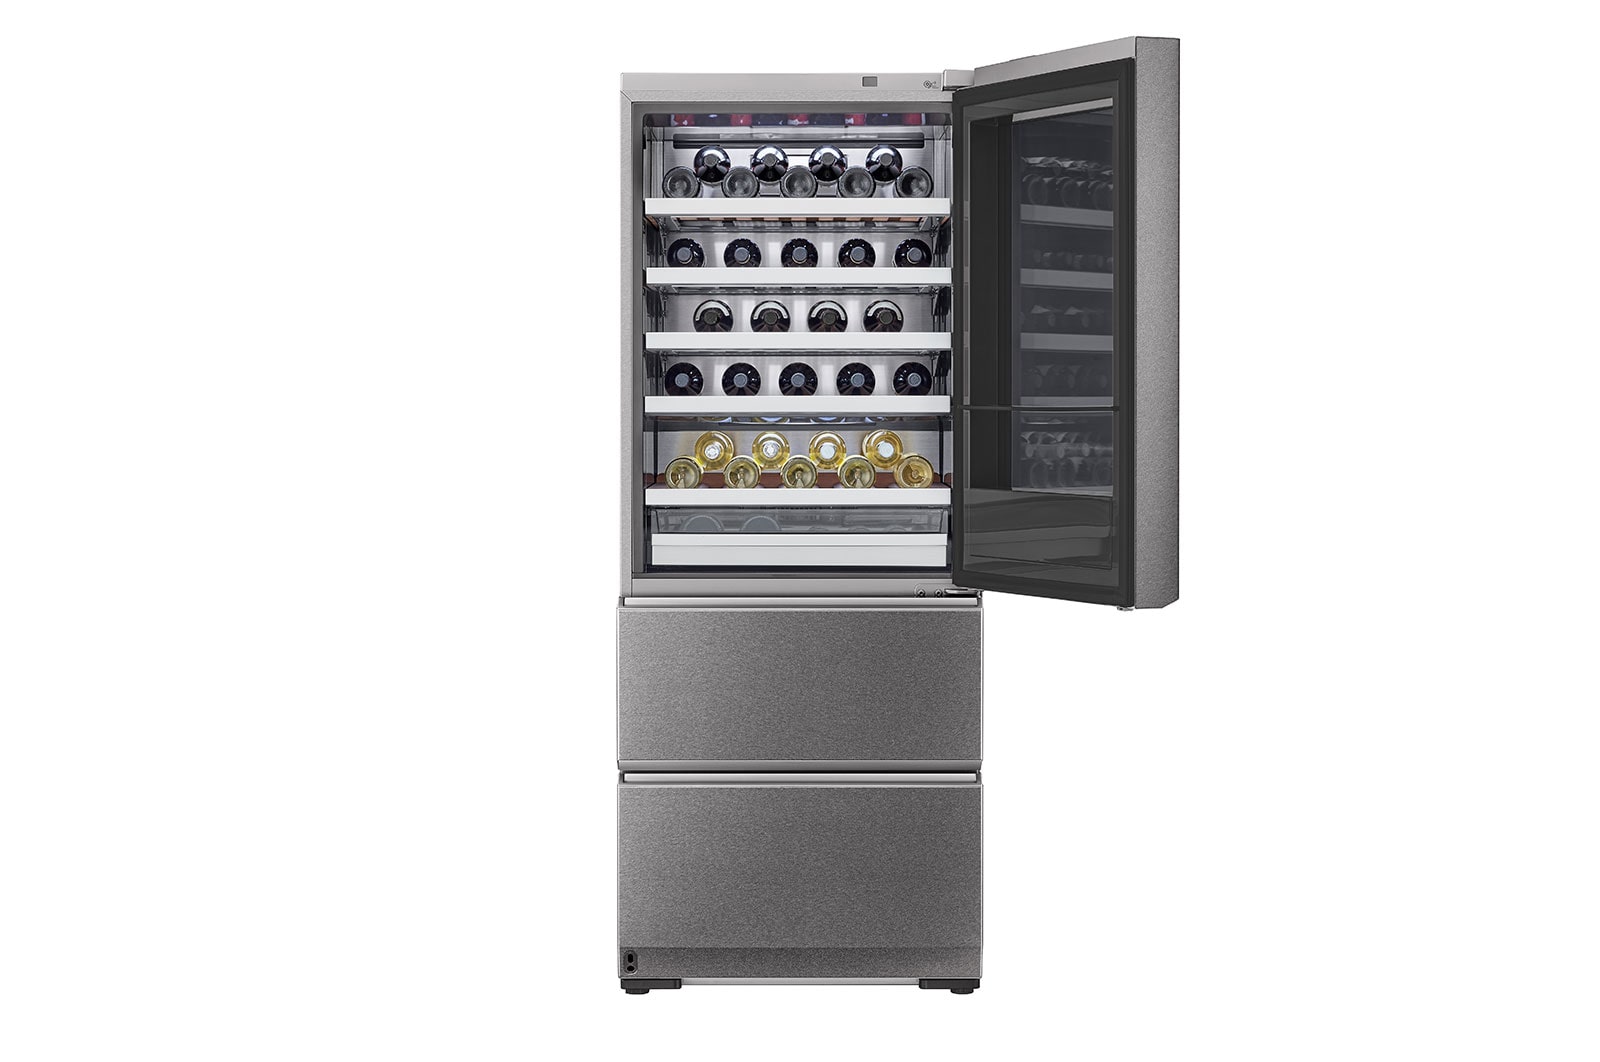 LG SIGNATURE 15 cu. ft. Smart wi-fi Enabled InstaView® Wine Cellar Refrigerator, Front Open Filled, URETC1408N